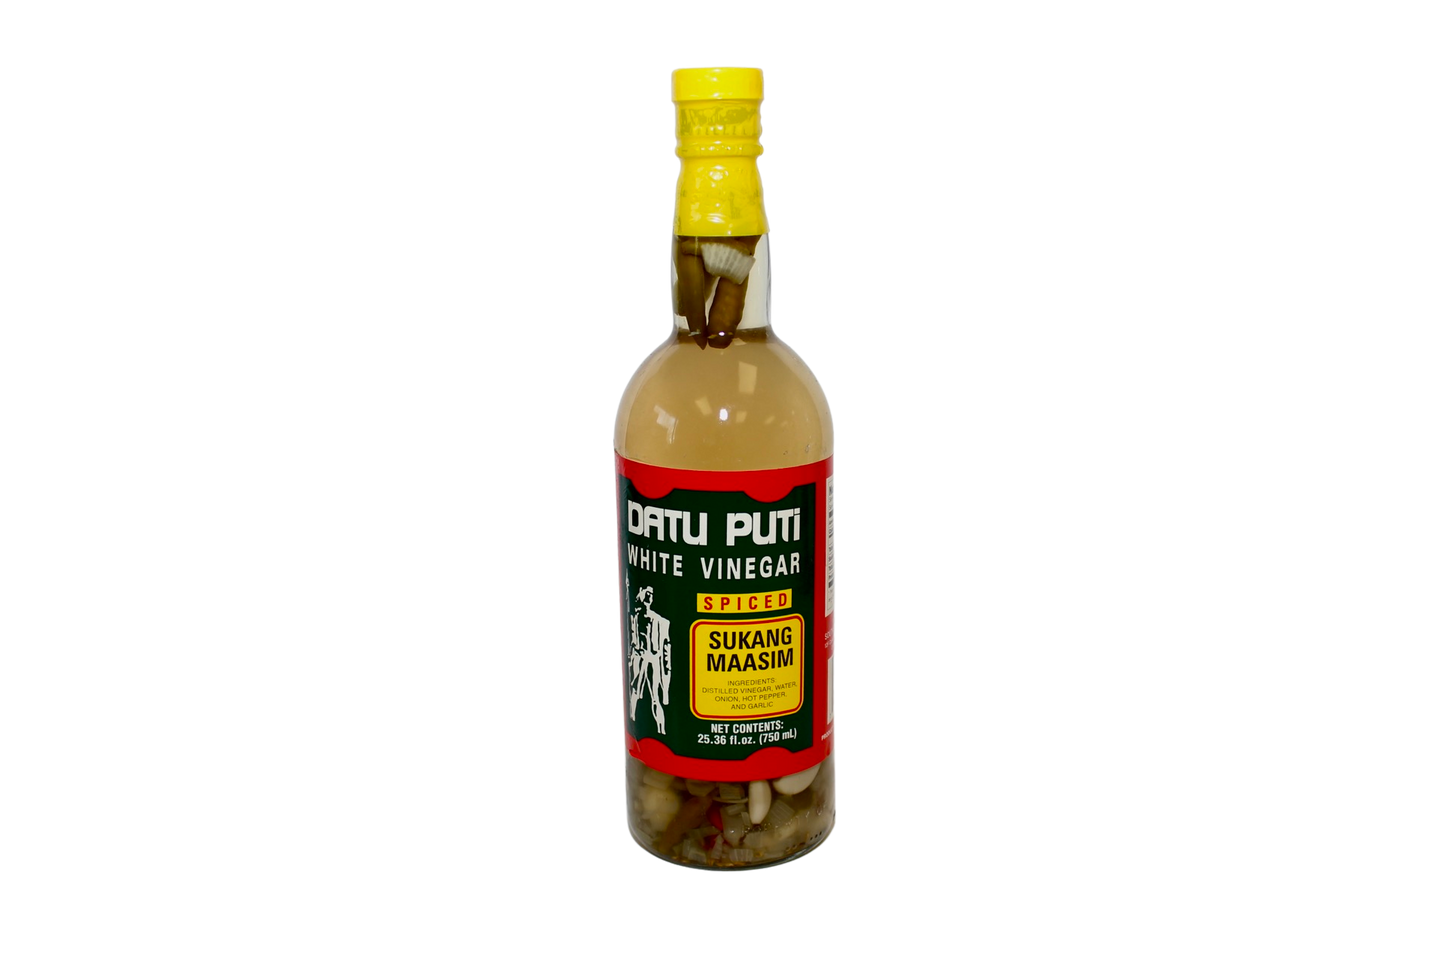 Datu Puti White Vinegar Spiced (Sukang Maasim) 750 mL